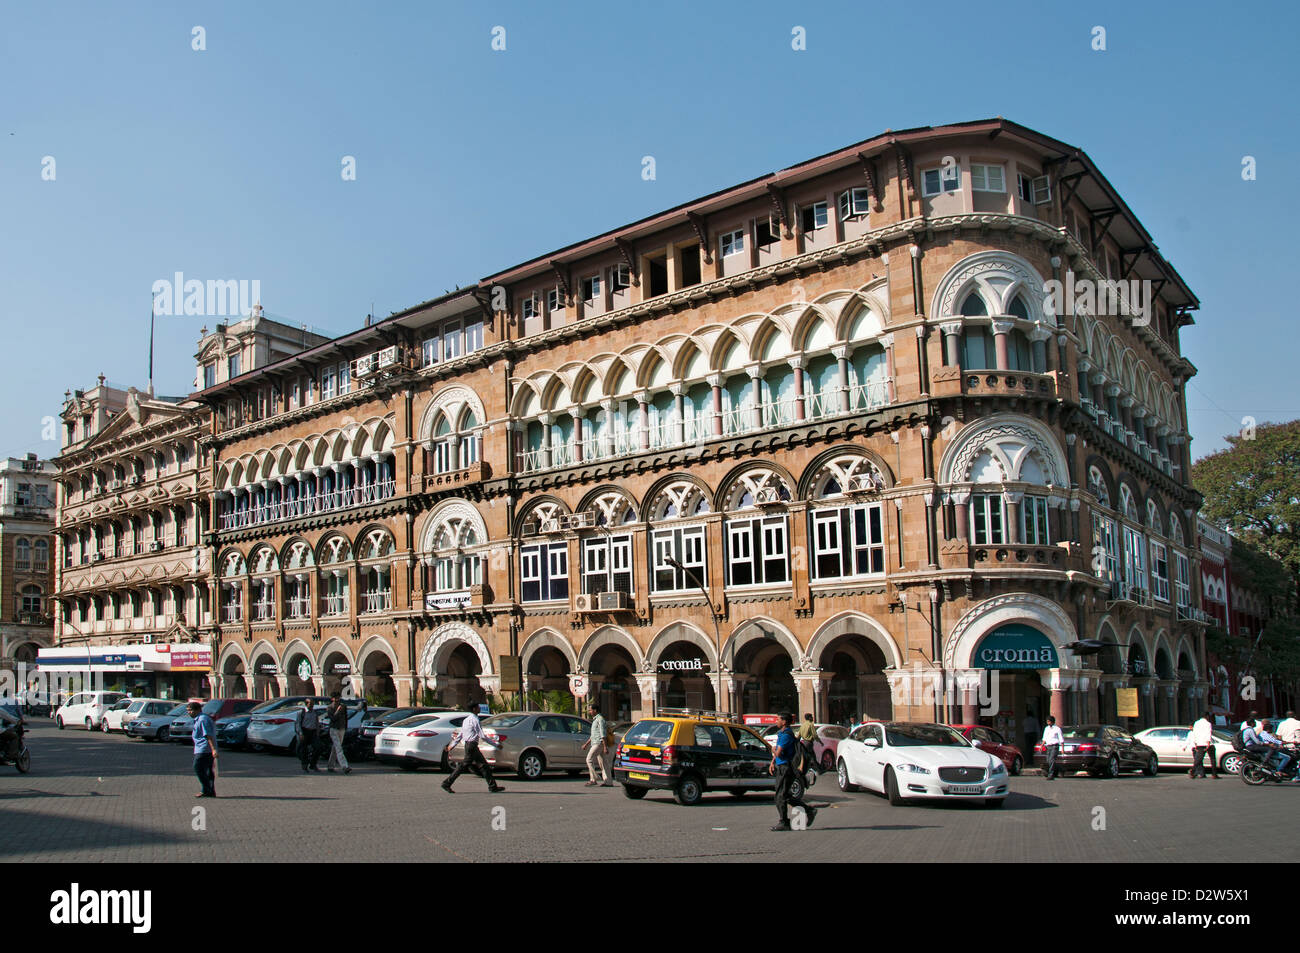 Croma Horniman cerchio VN road Kala Ghoda Fort Mumbai ( Bombay ) India architettura coloniale Foto Stock